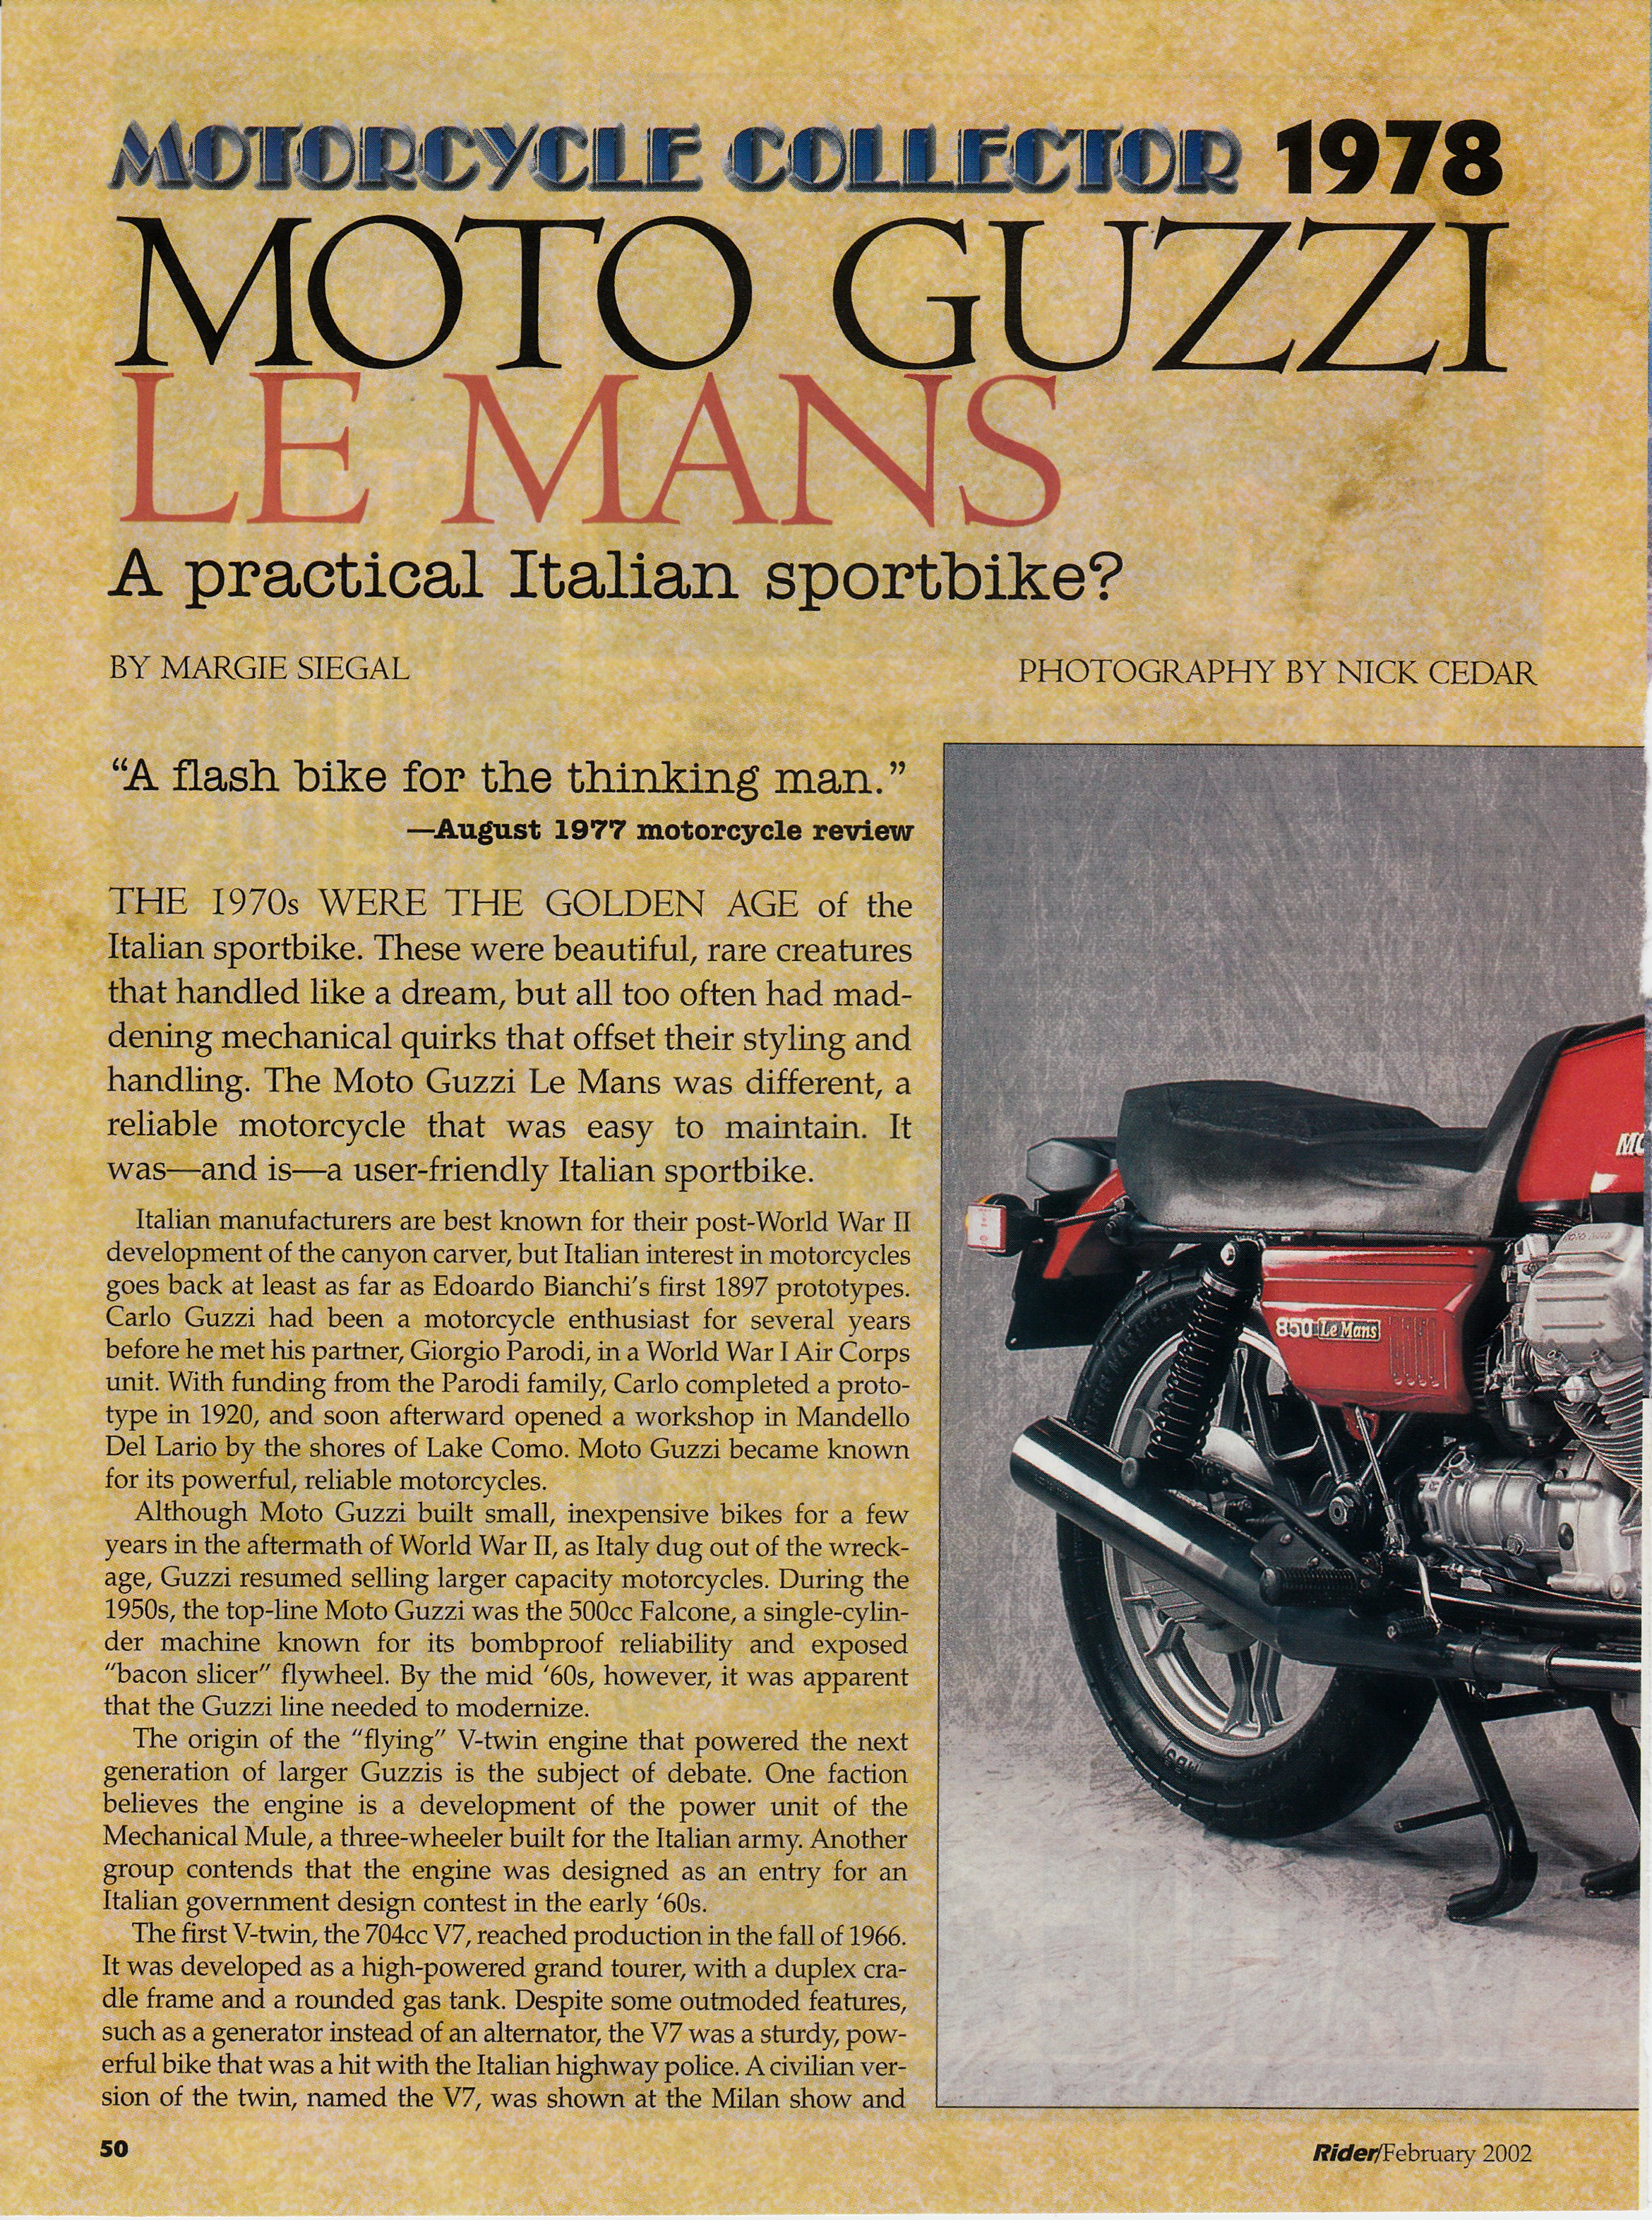 Article - Rider (2002 February) Moto Guzzi Le Mans - A practical Italian sportbike?